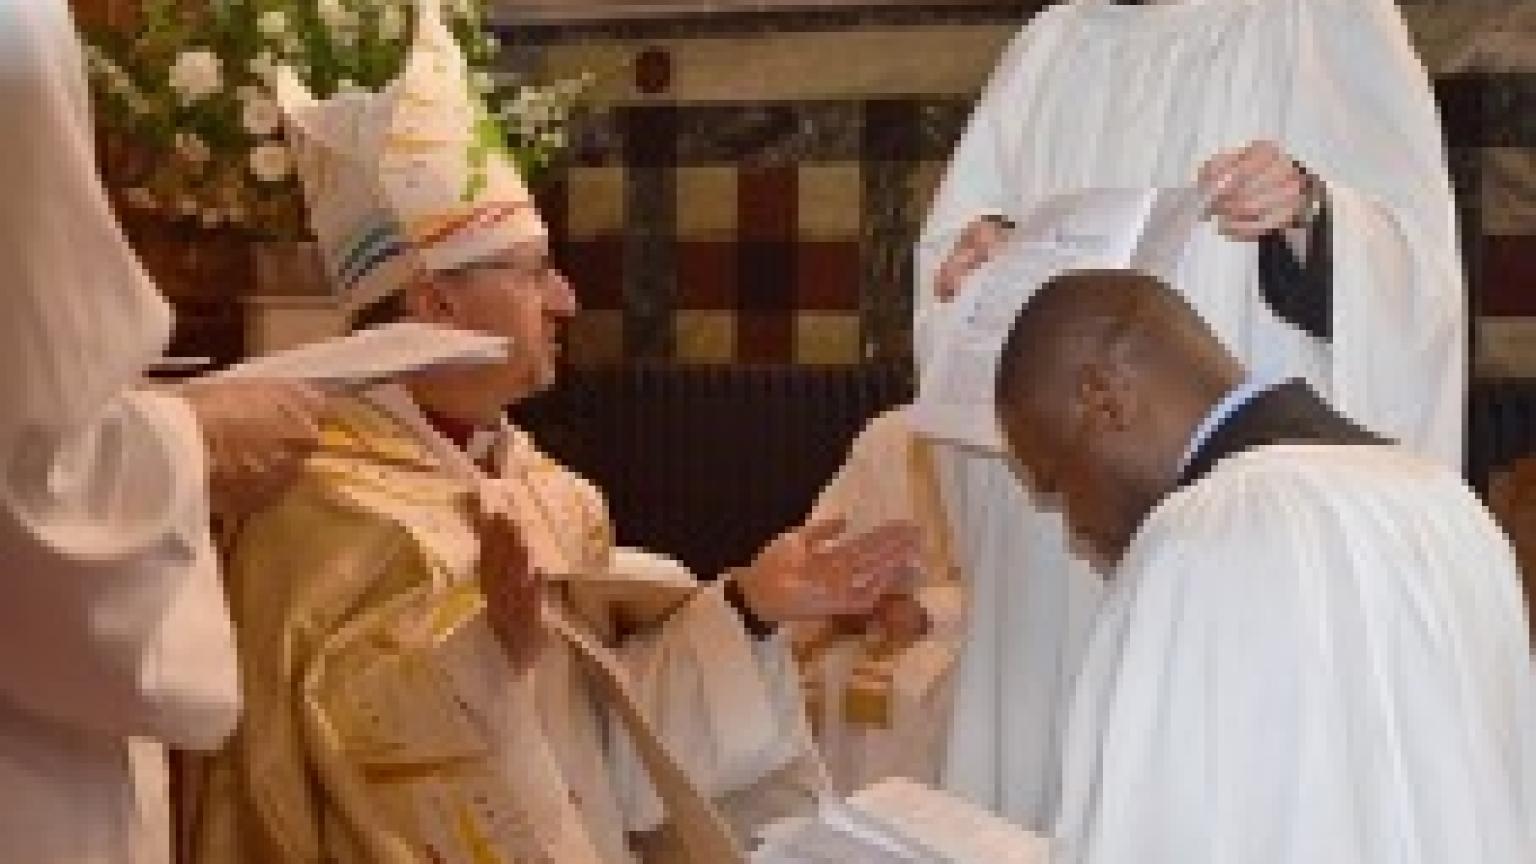 Bishop Robert performing a blessing.